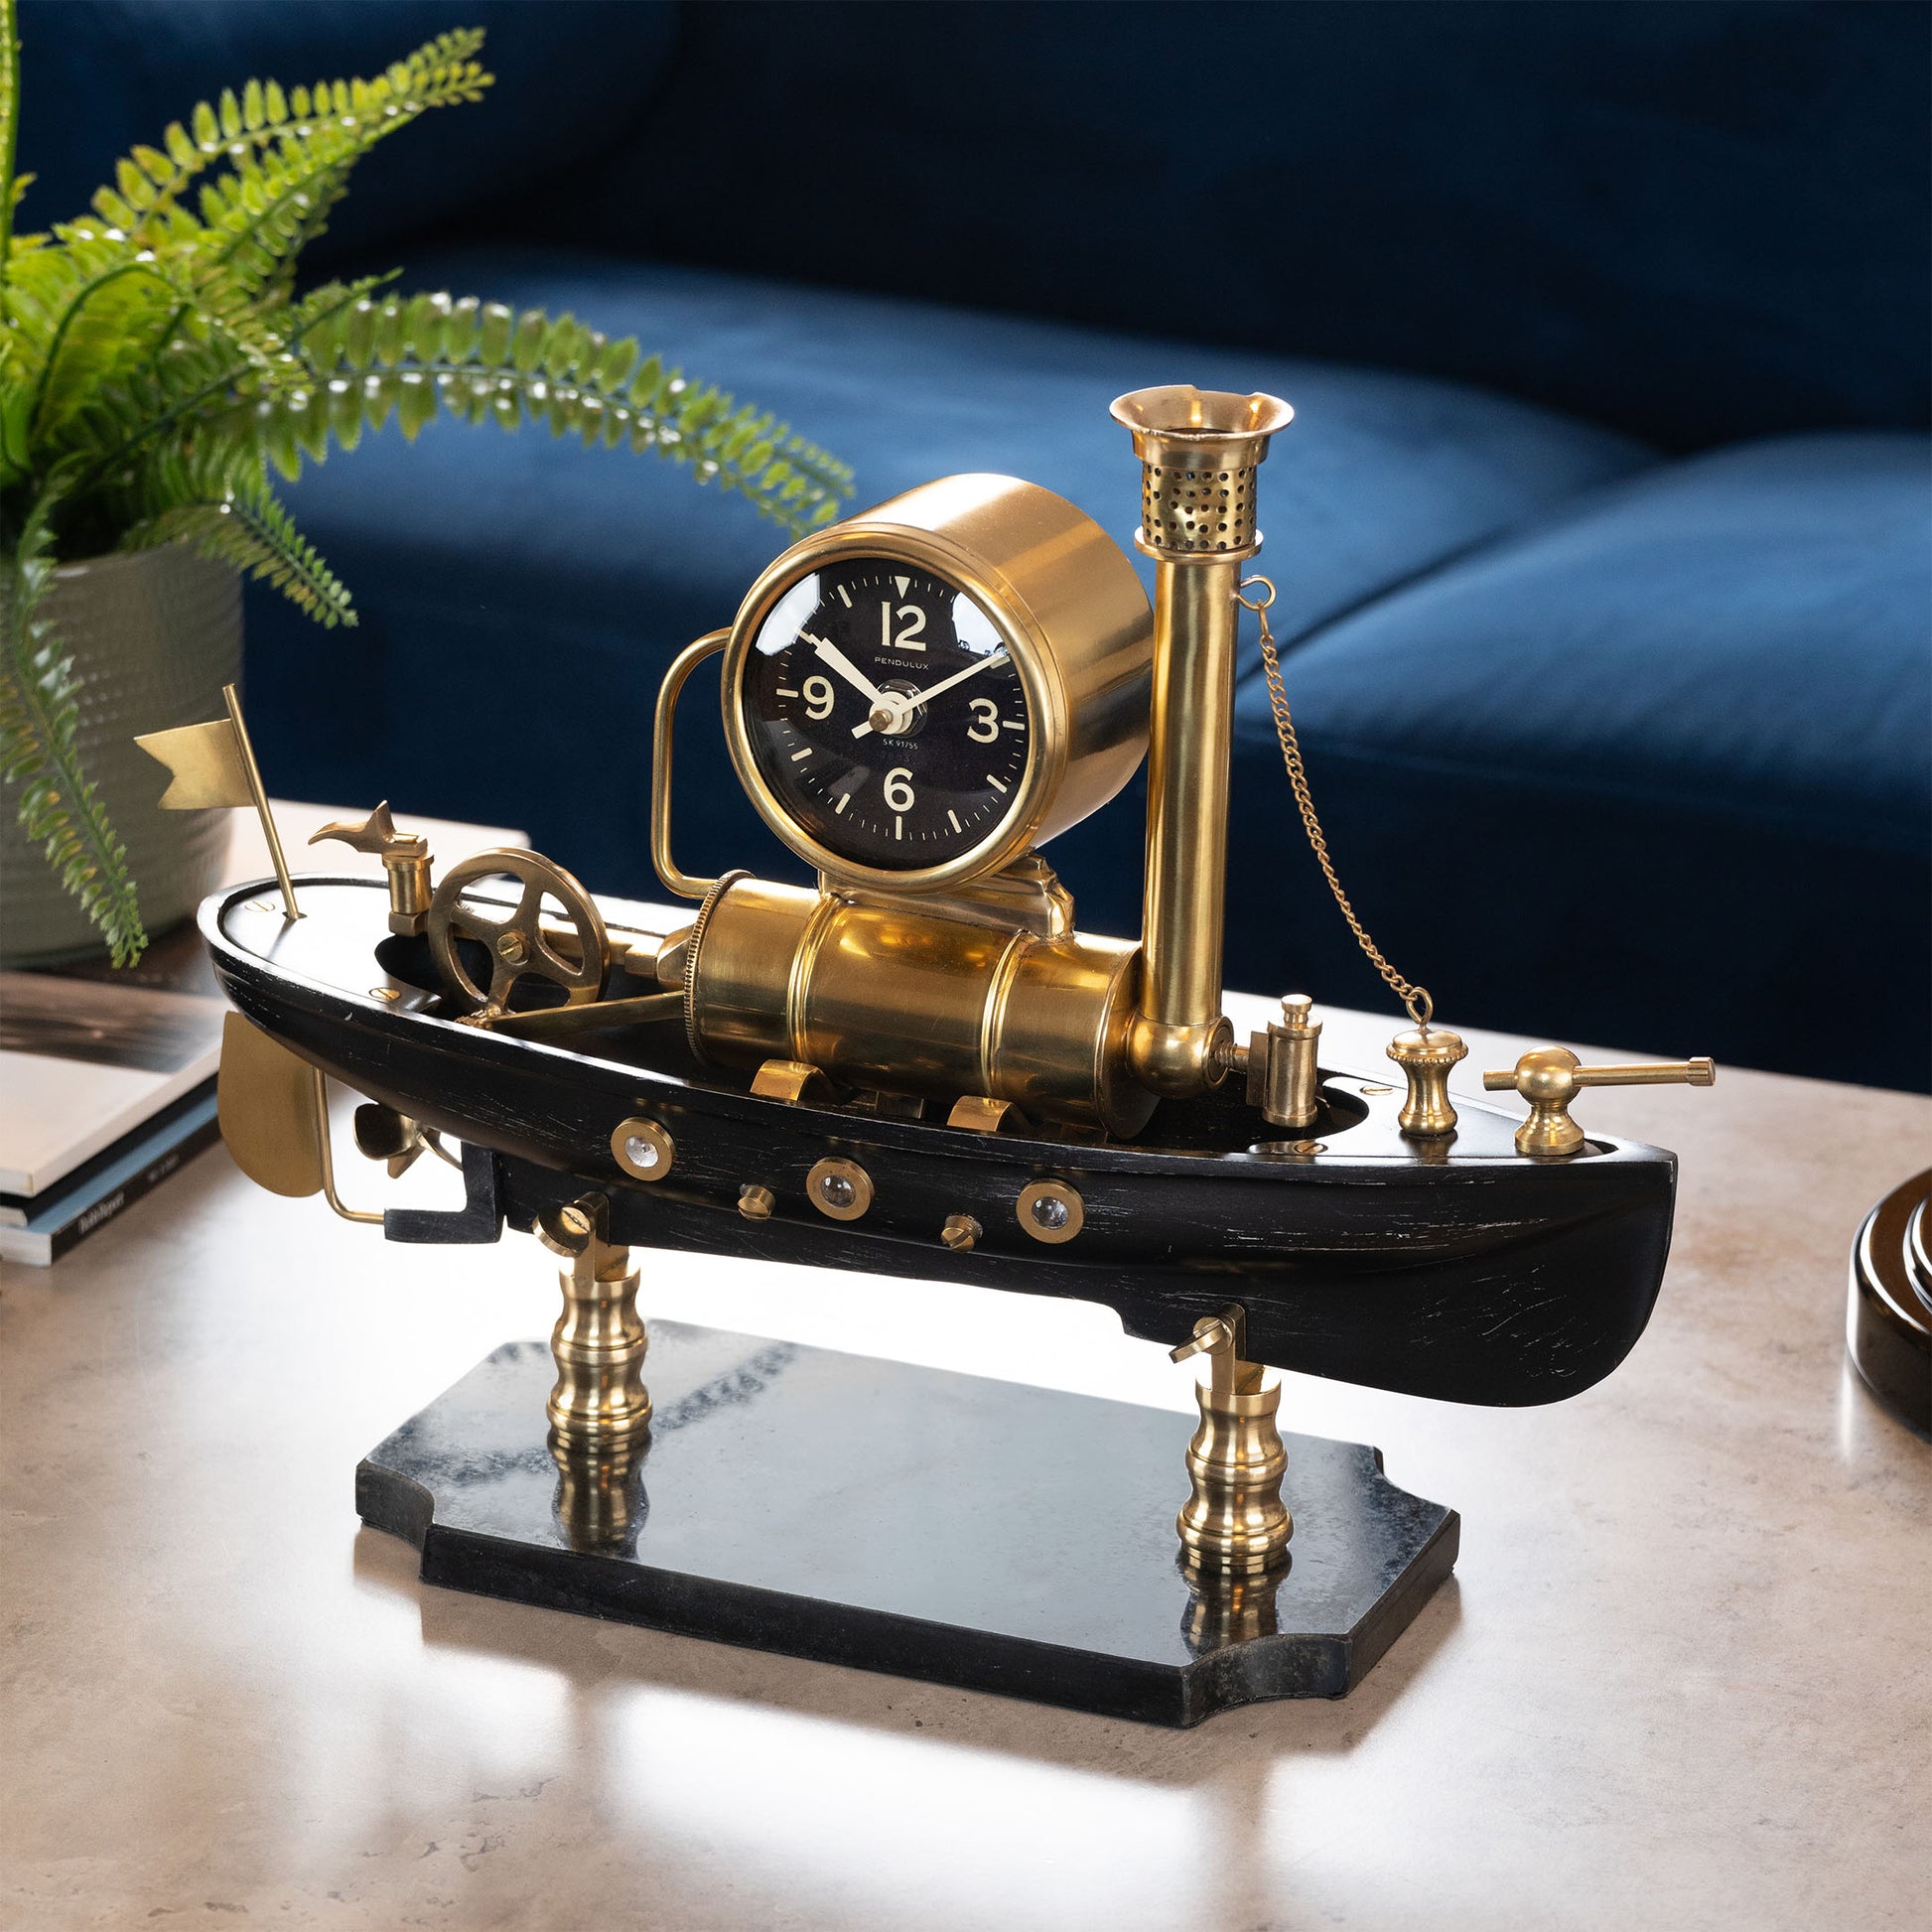 Steam Boat Table Clock